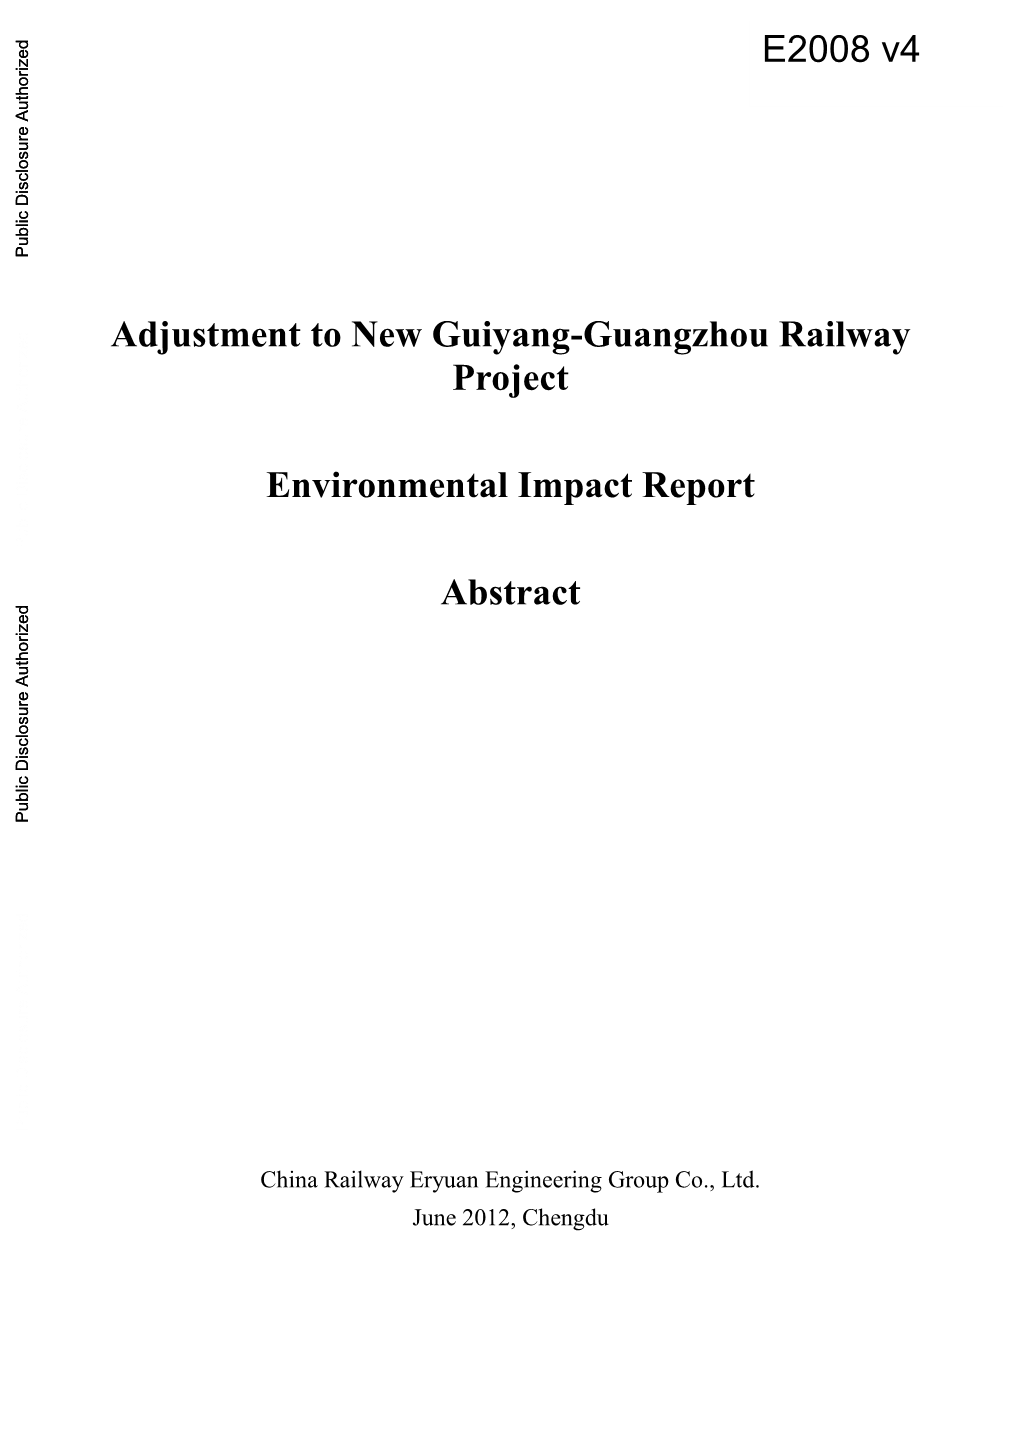 Adjustment to New Guiyang-Guangzhou Railway Project